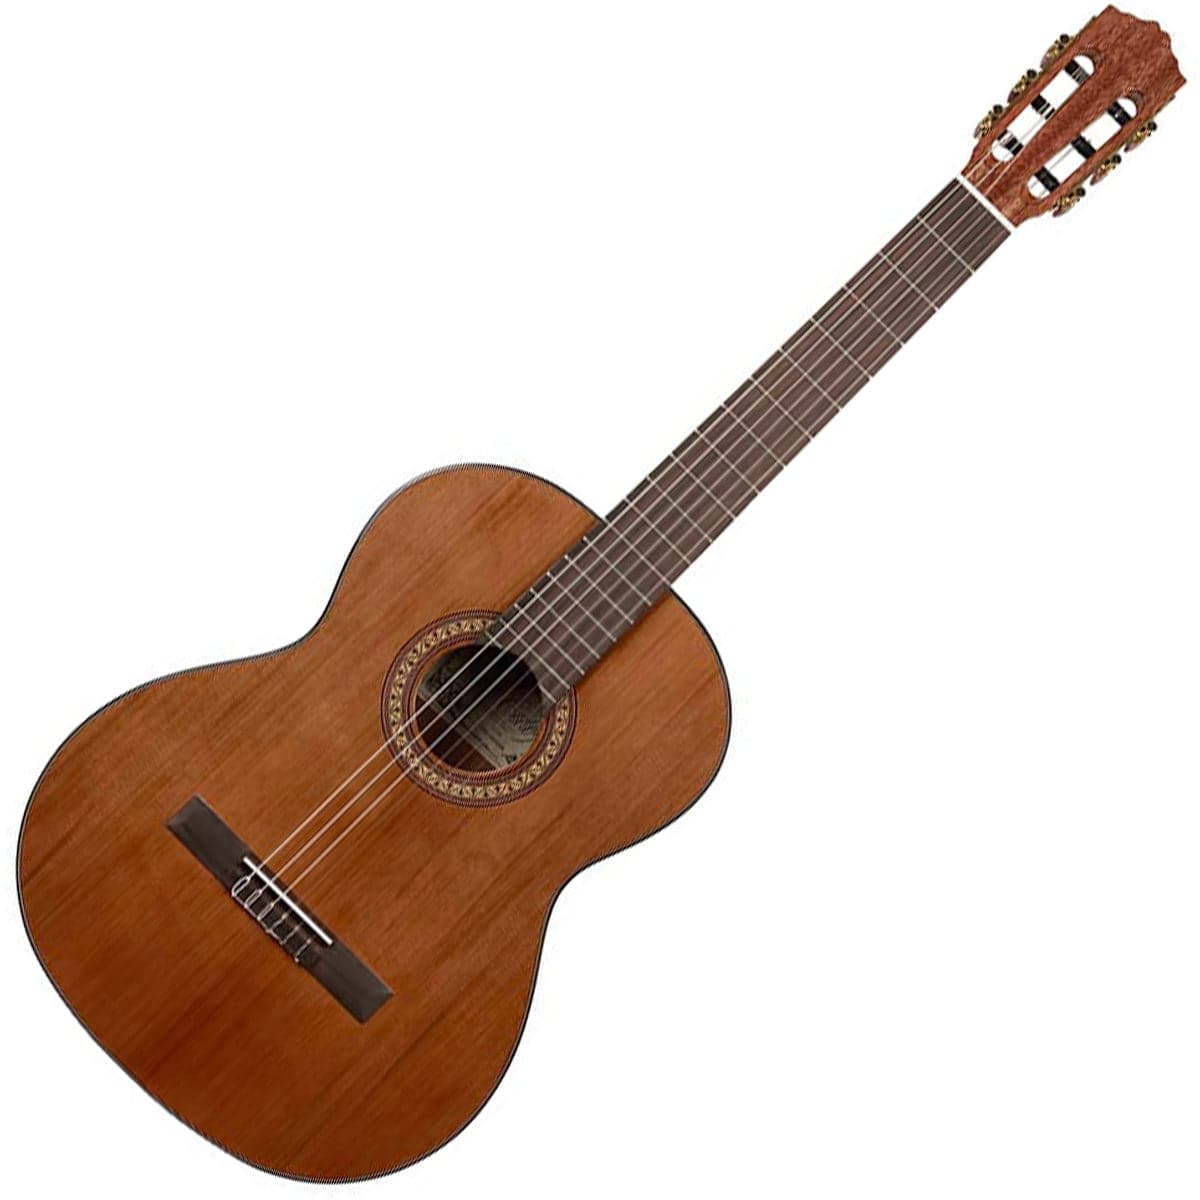 Salvador Cortez CC-21 Artist Series Classical Guitar with Solid Cedar Top - Gloss Natural